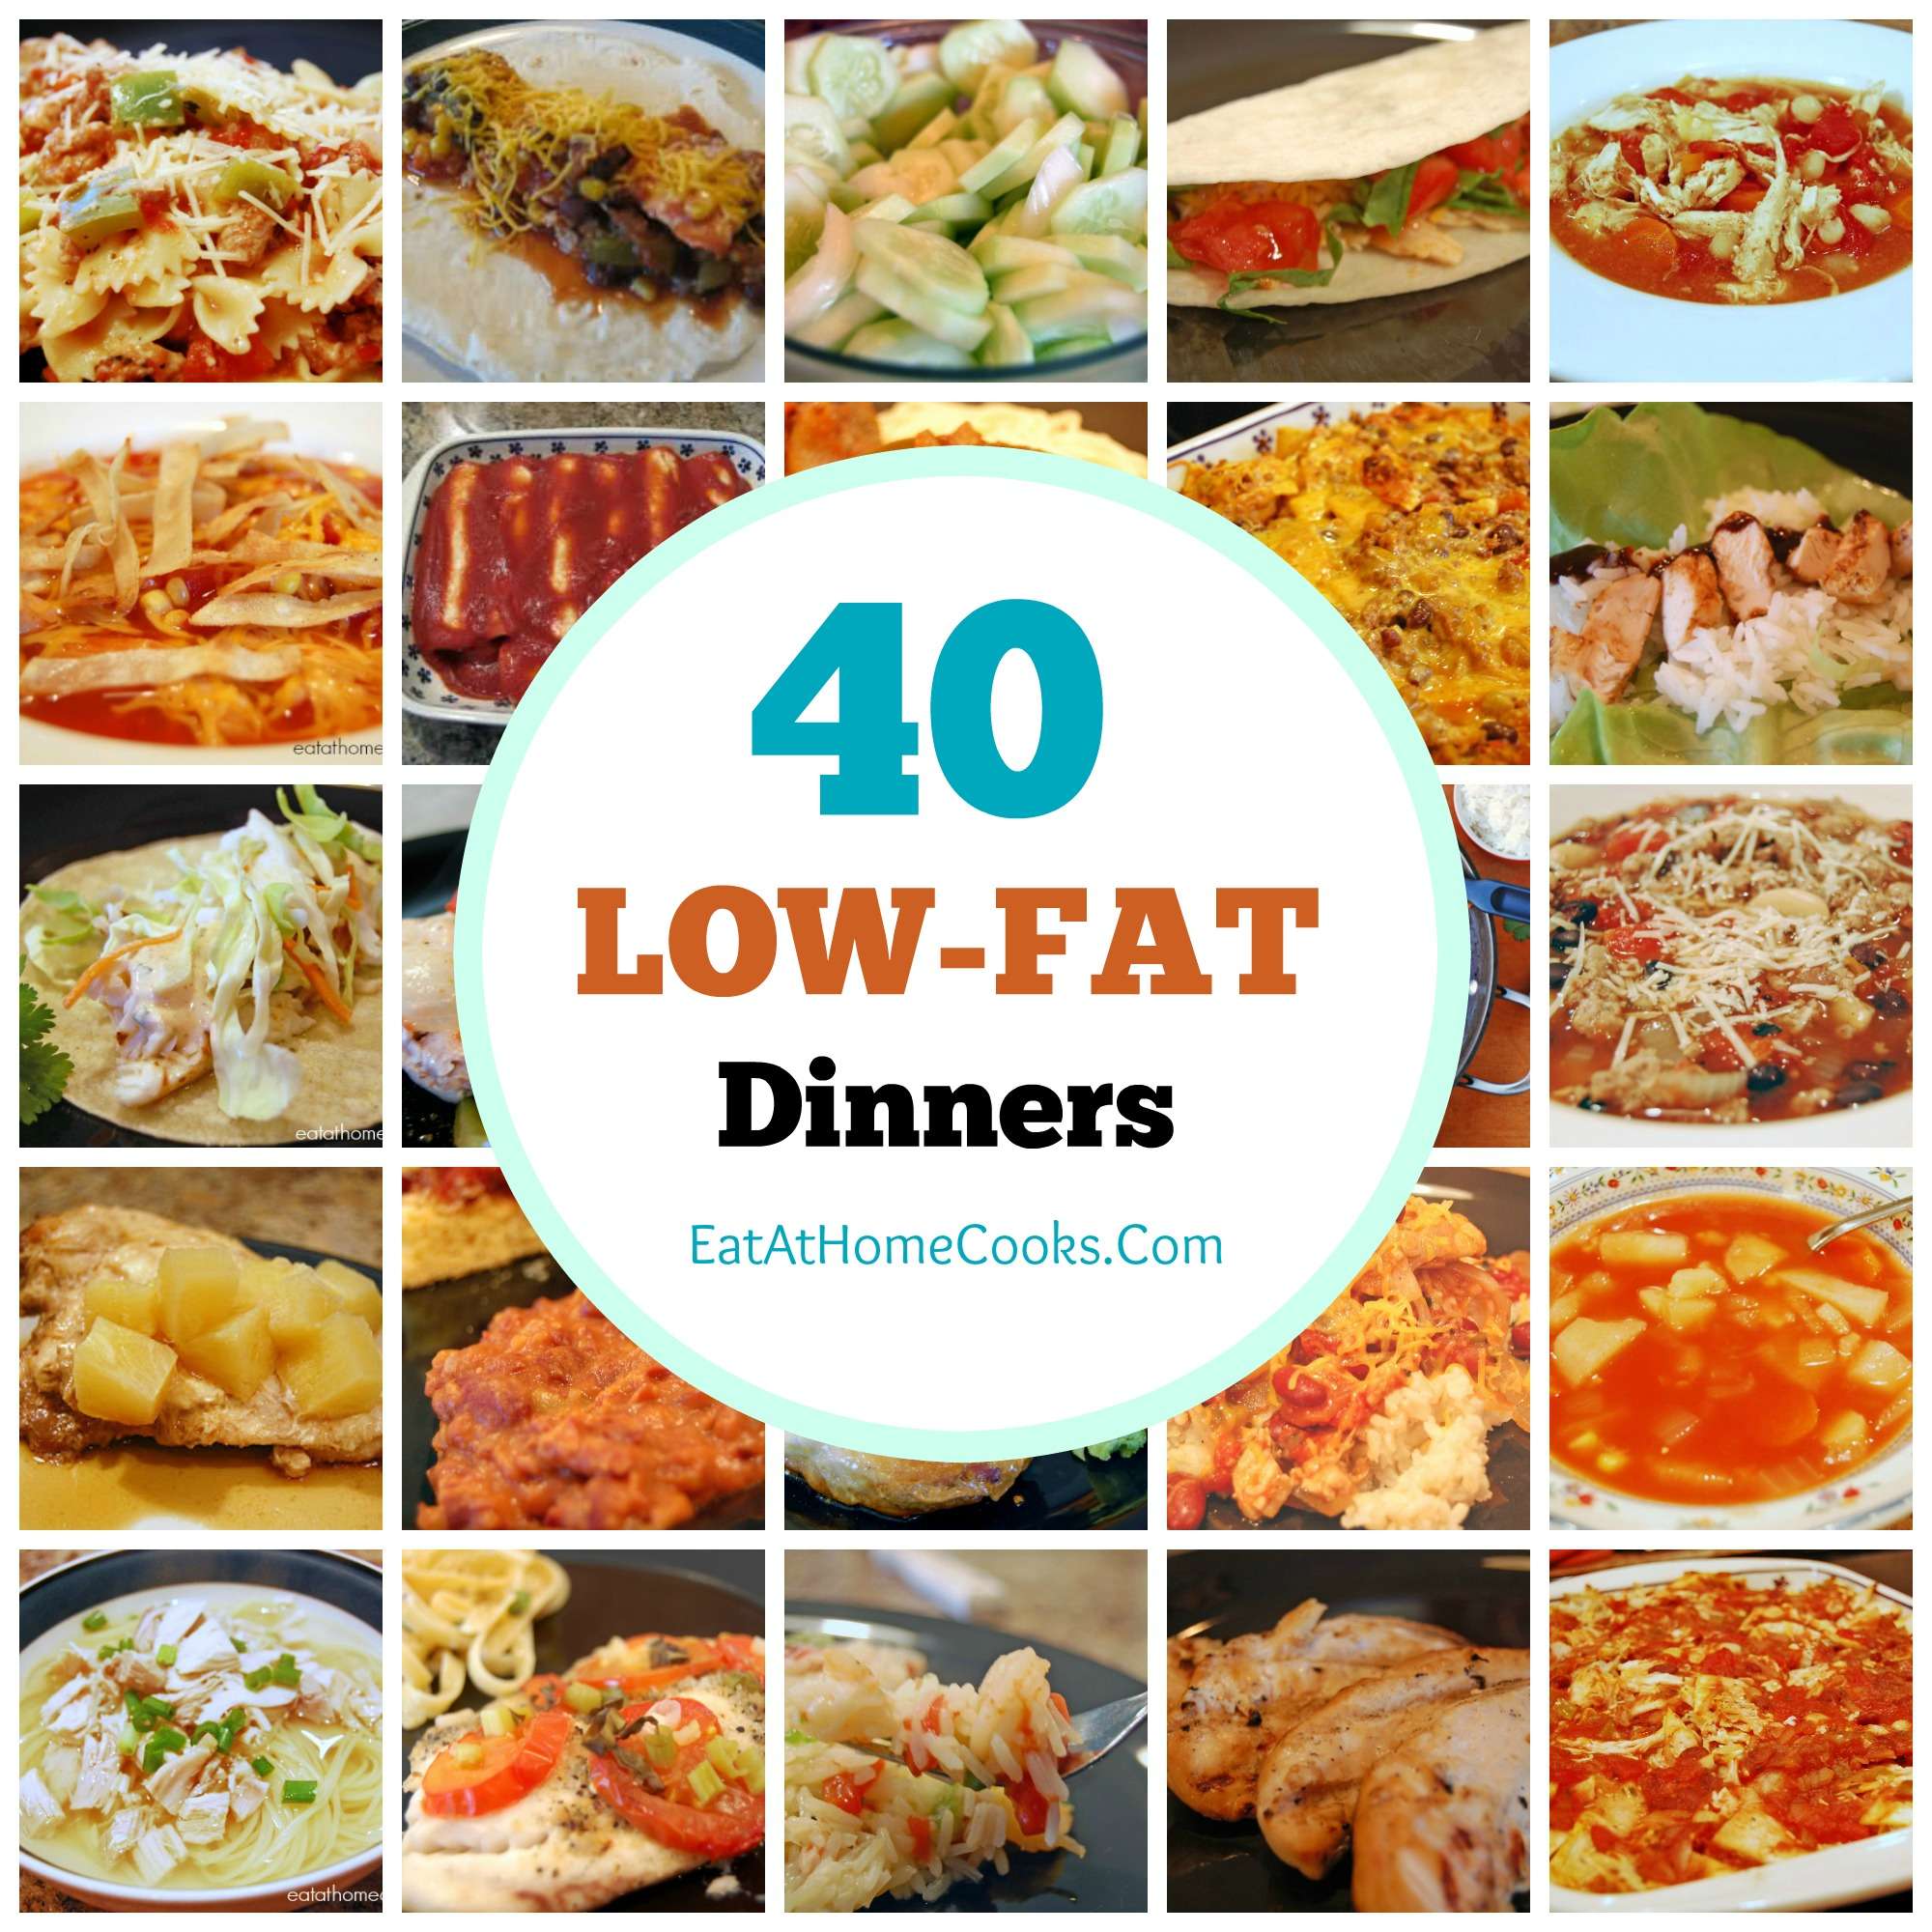 My Big Fat List of 40 Low